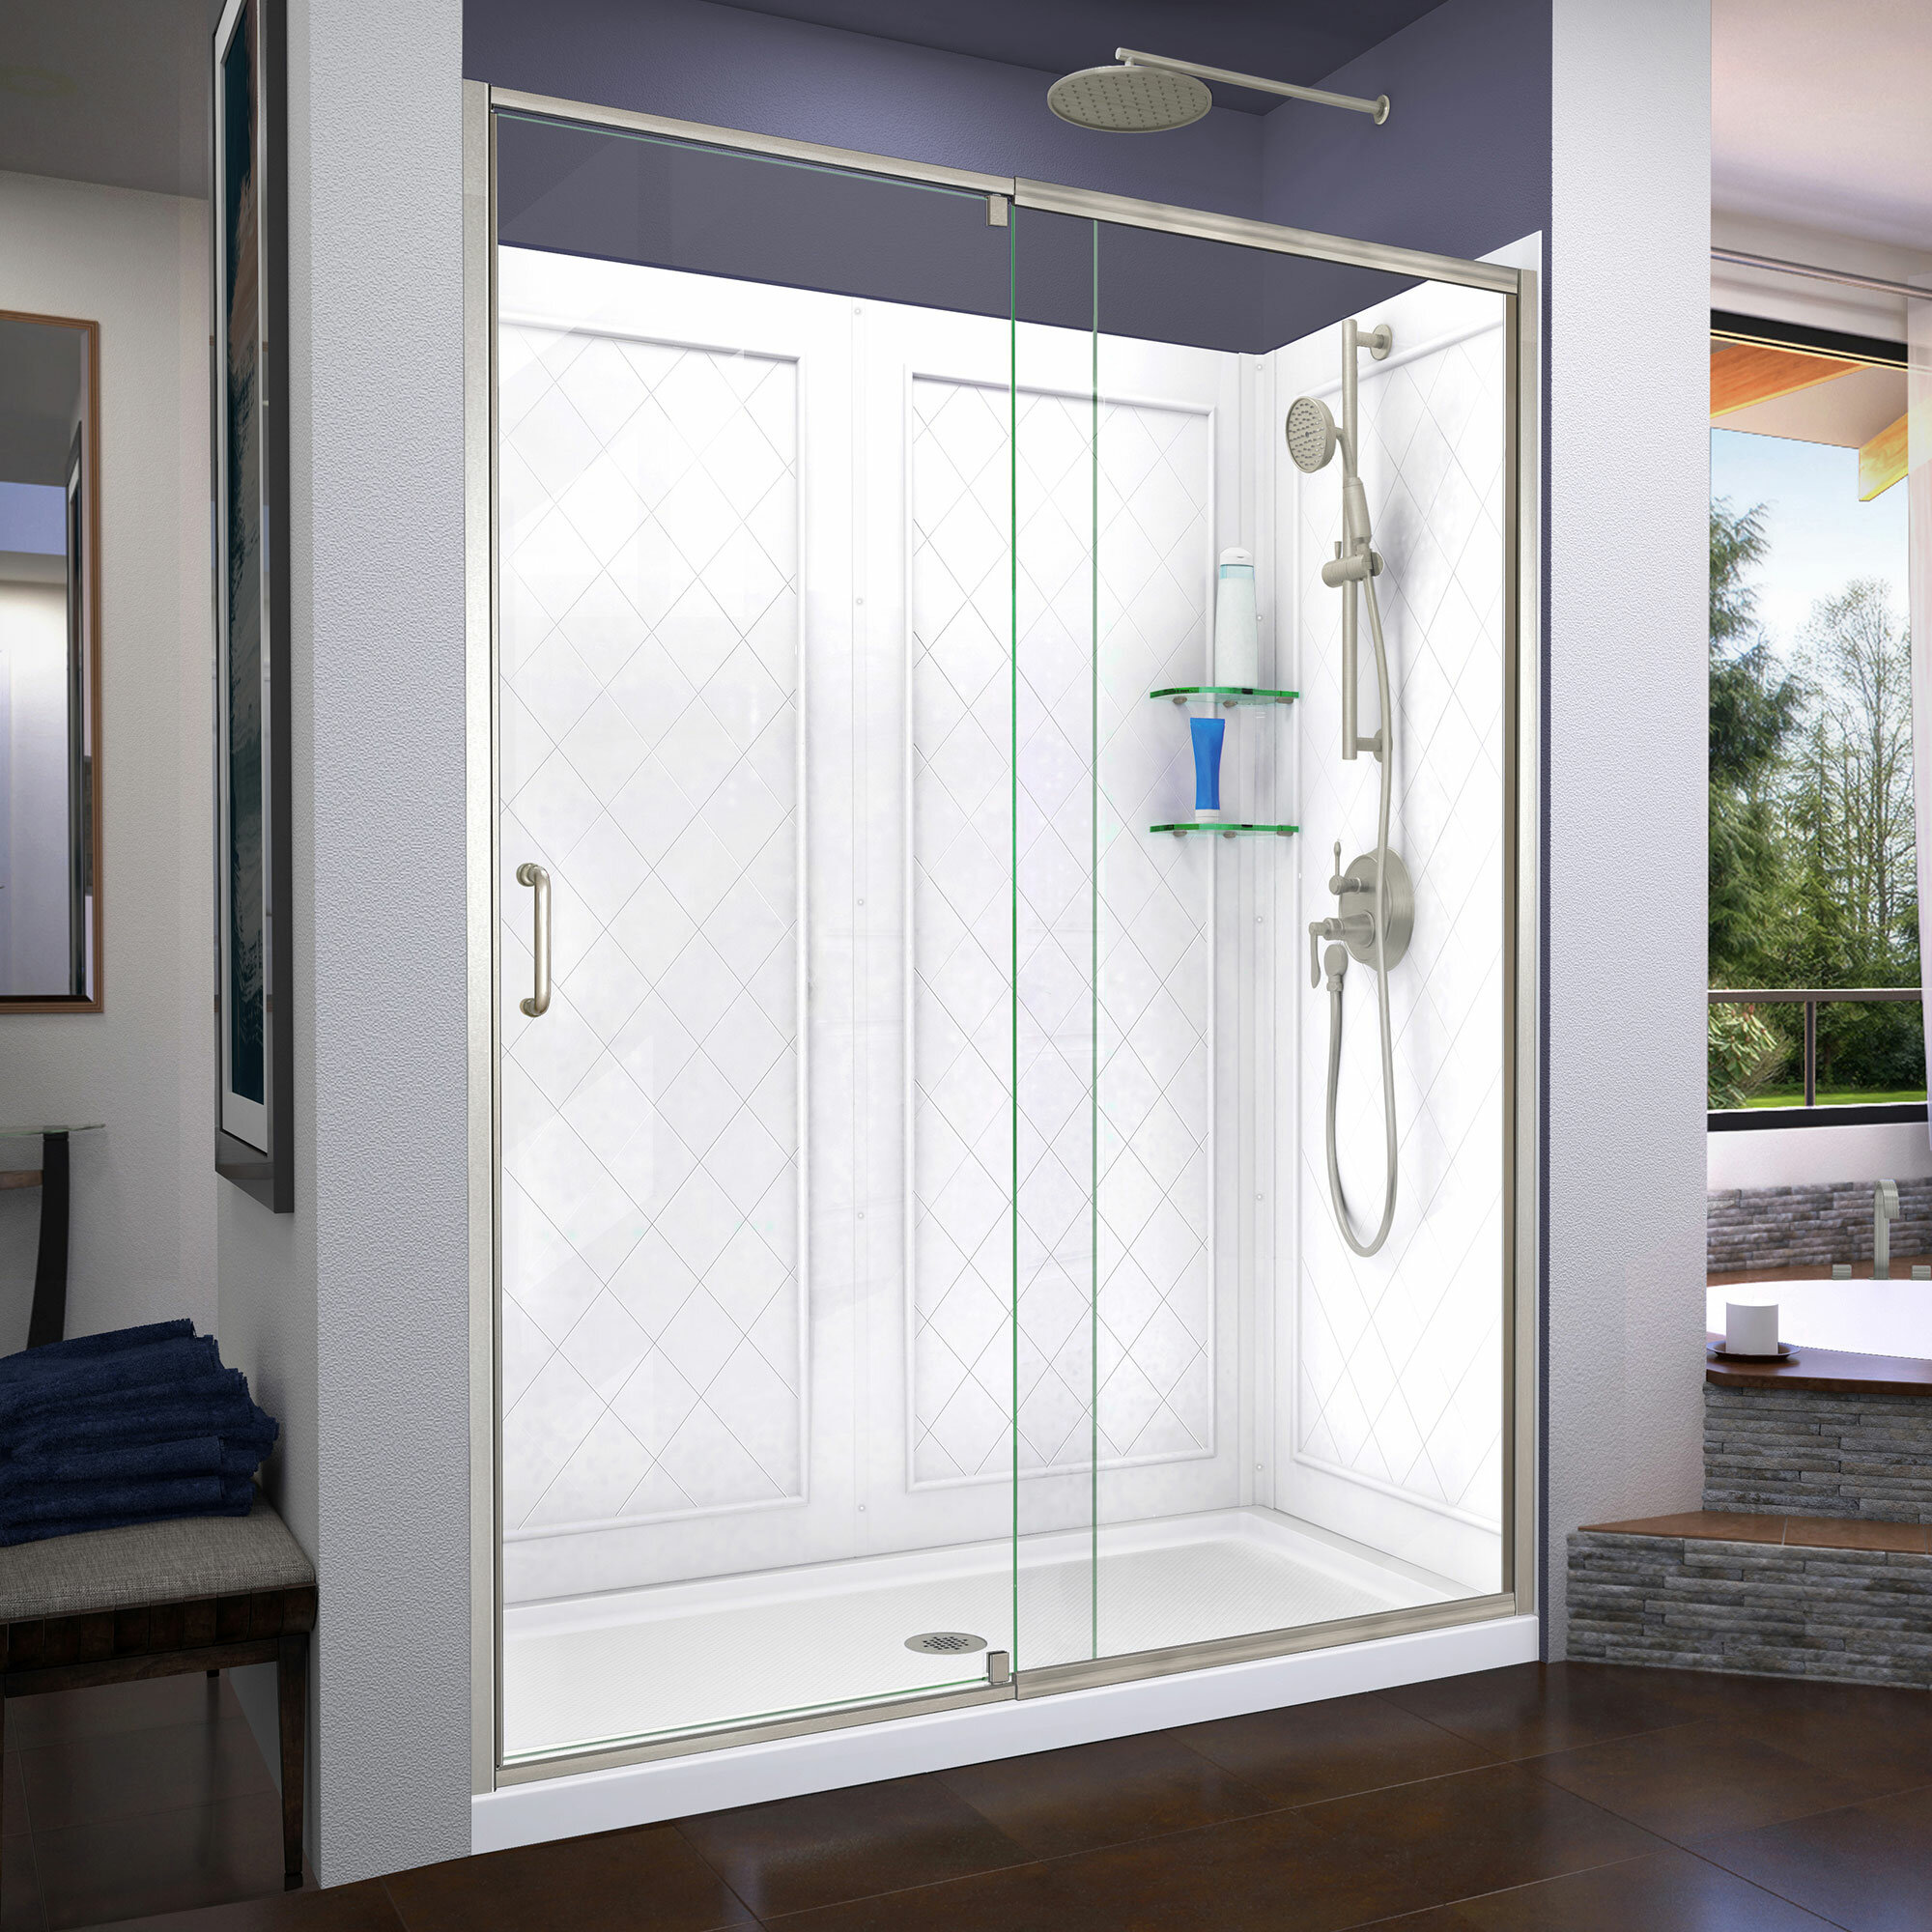 VTI 60 W X 36 D X 72 H Frameless Sliding Shower Enclosure With